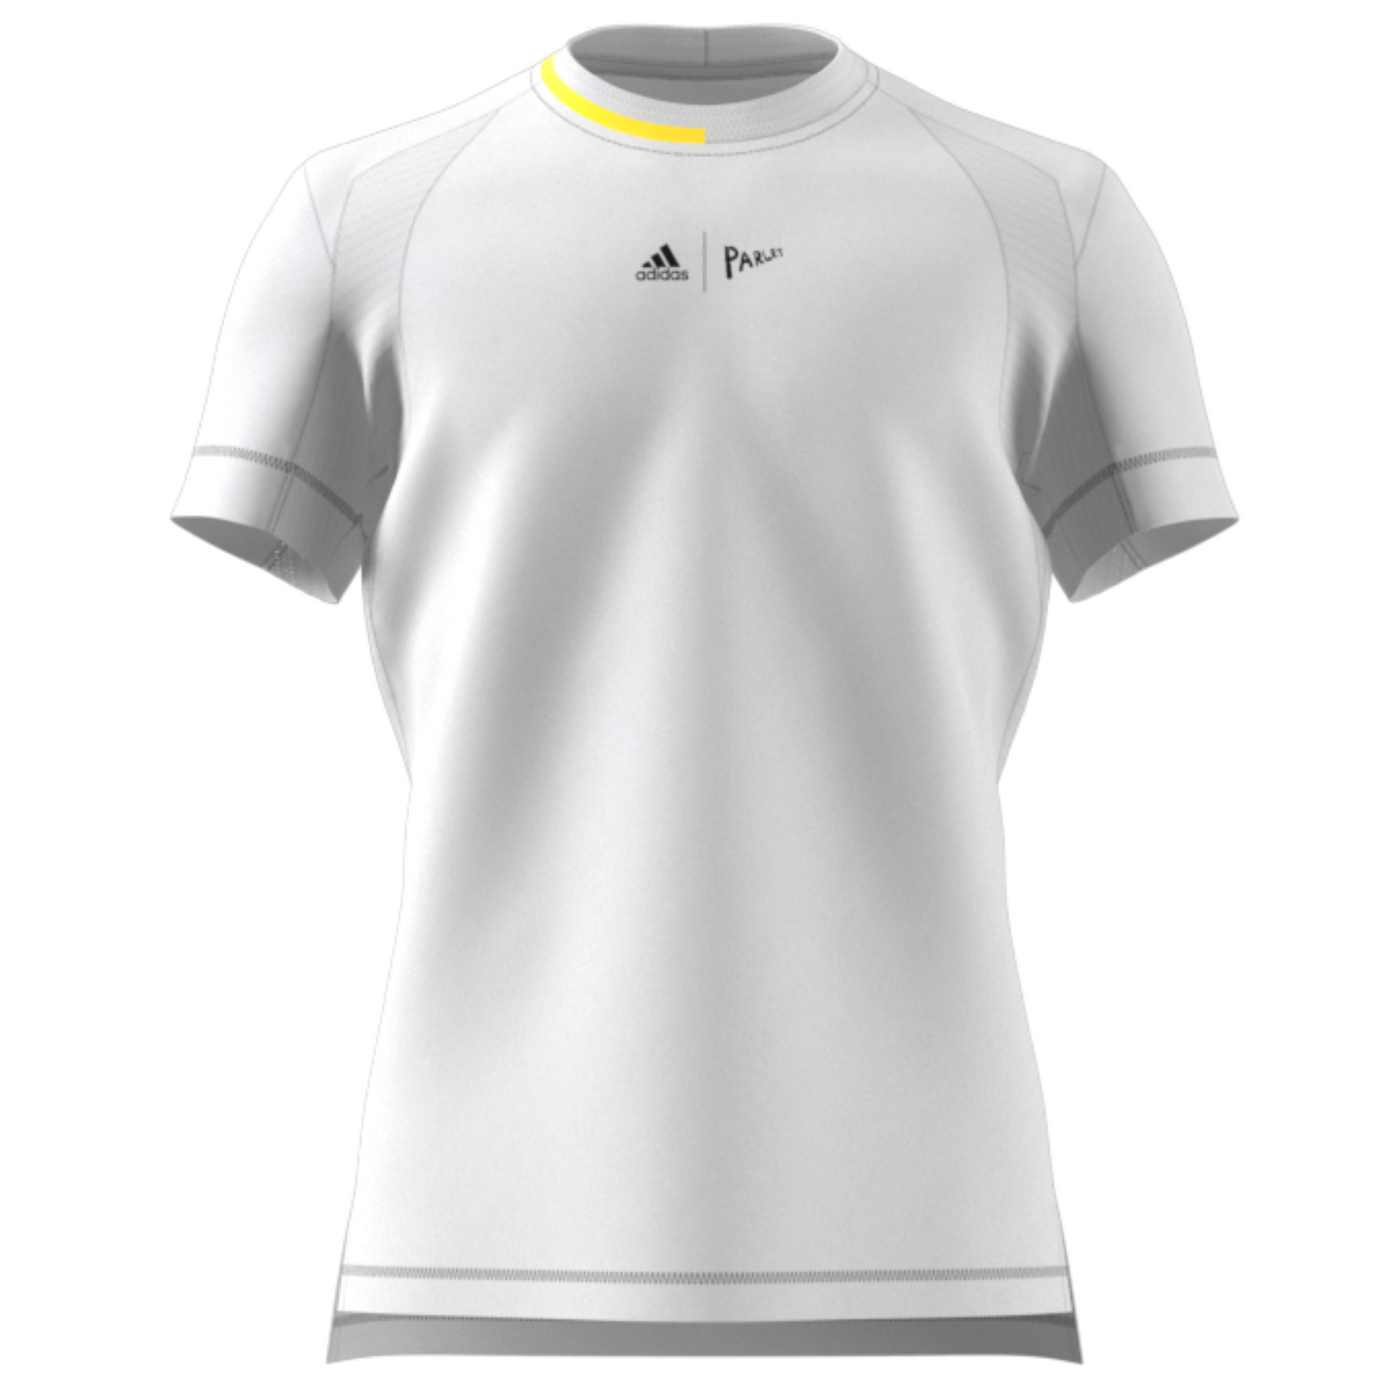 Adidas Performance London Stretch Woven Men Tennis T-Shirt - White/Impyel